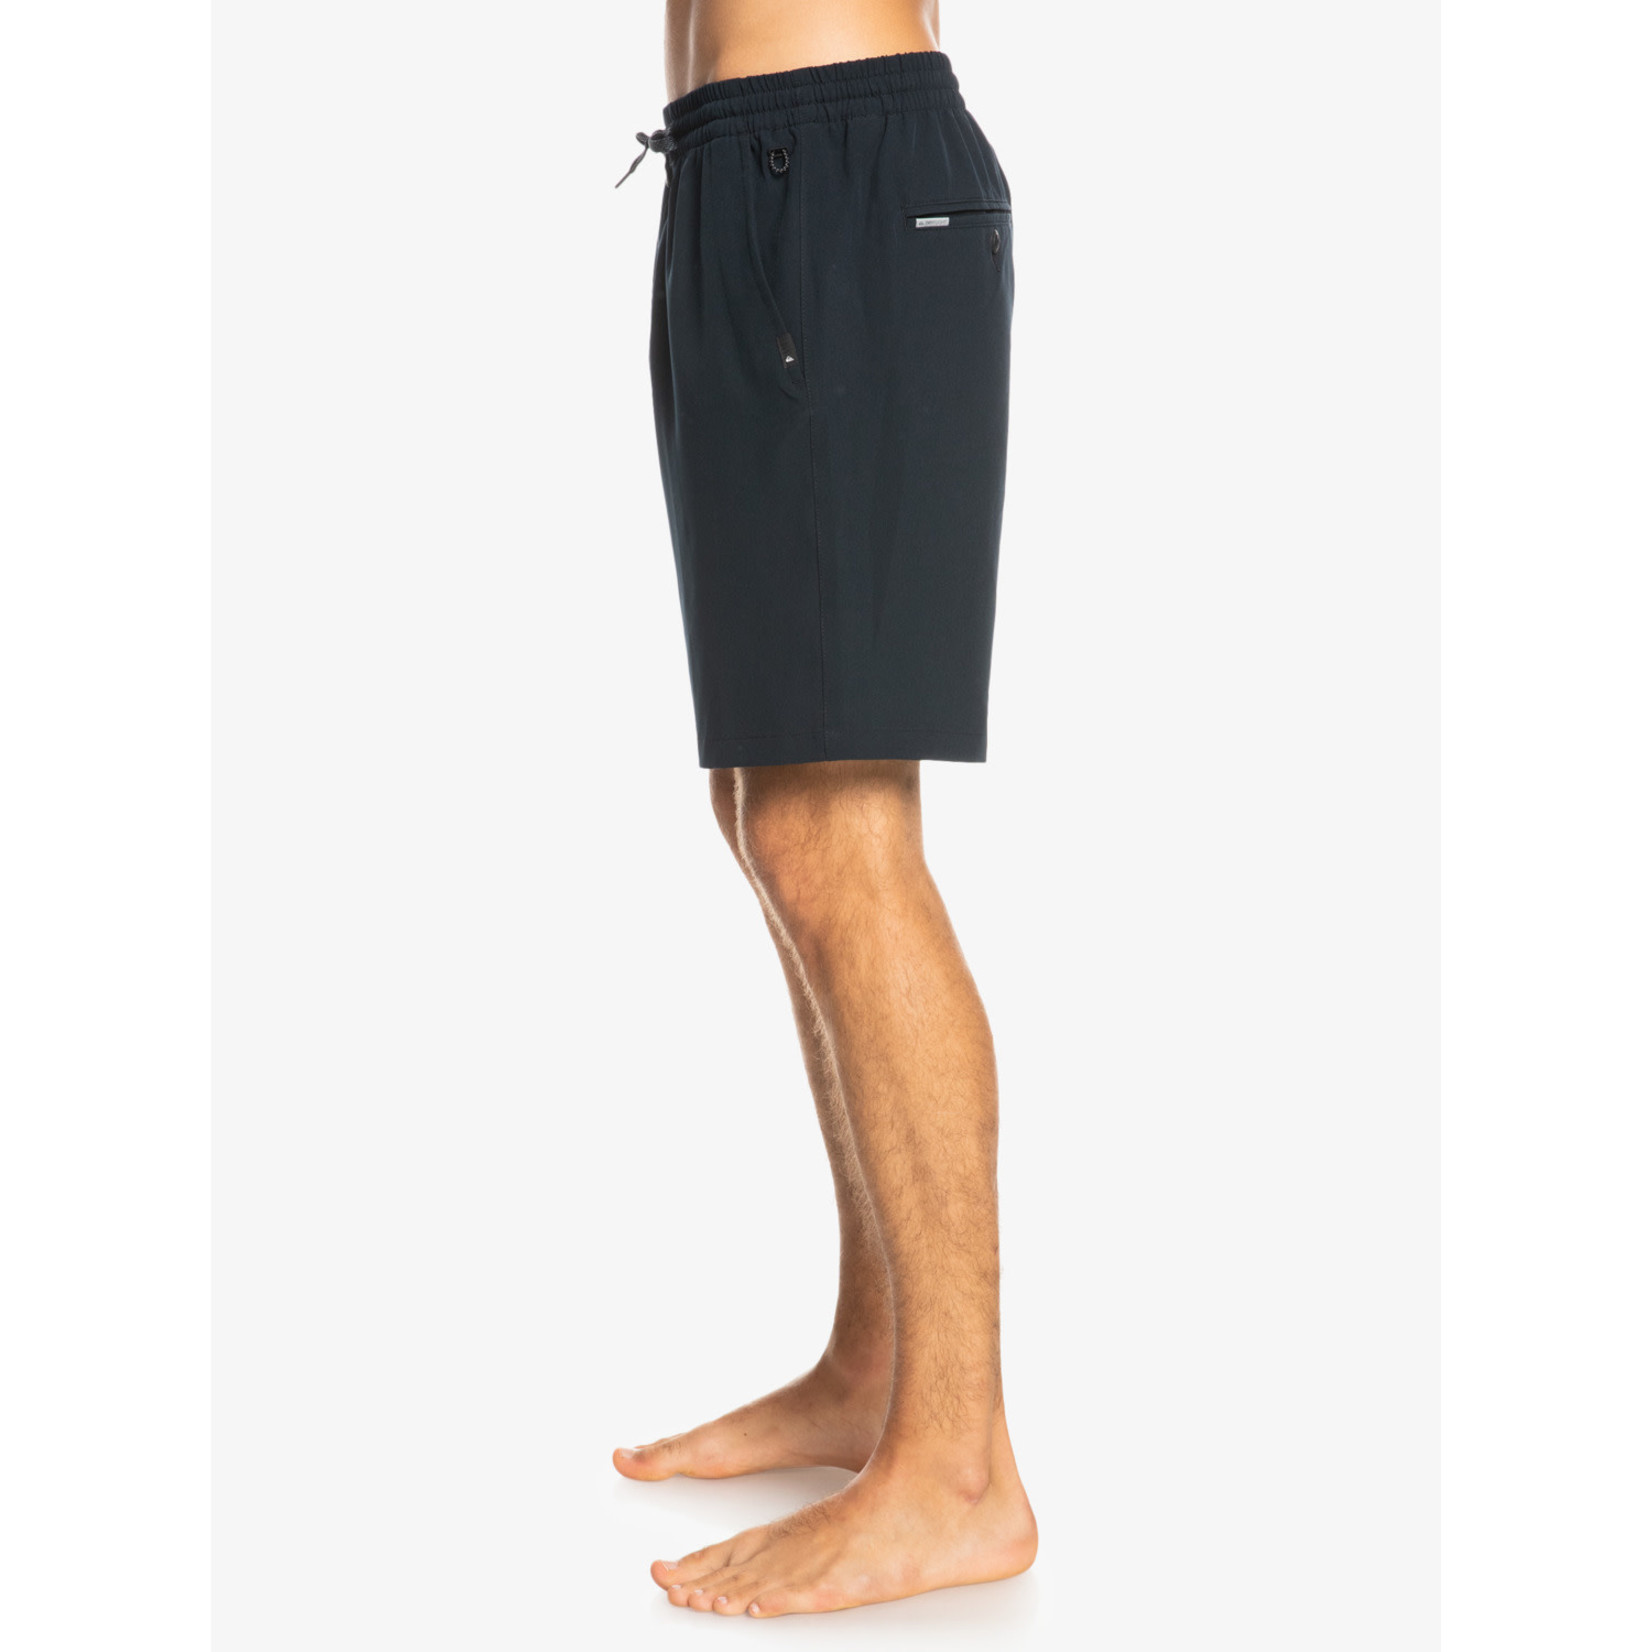 Quiksilver Ocean Elastic Shorts